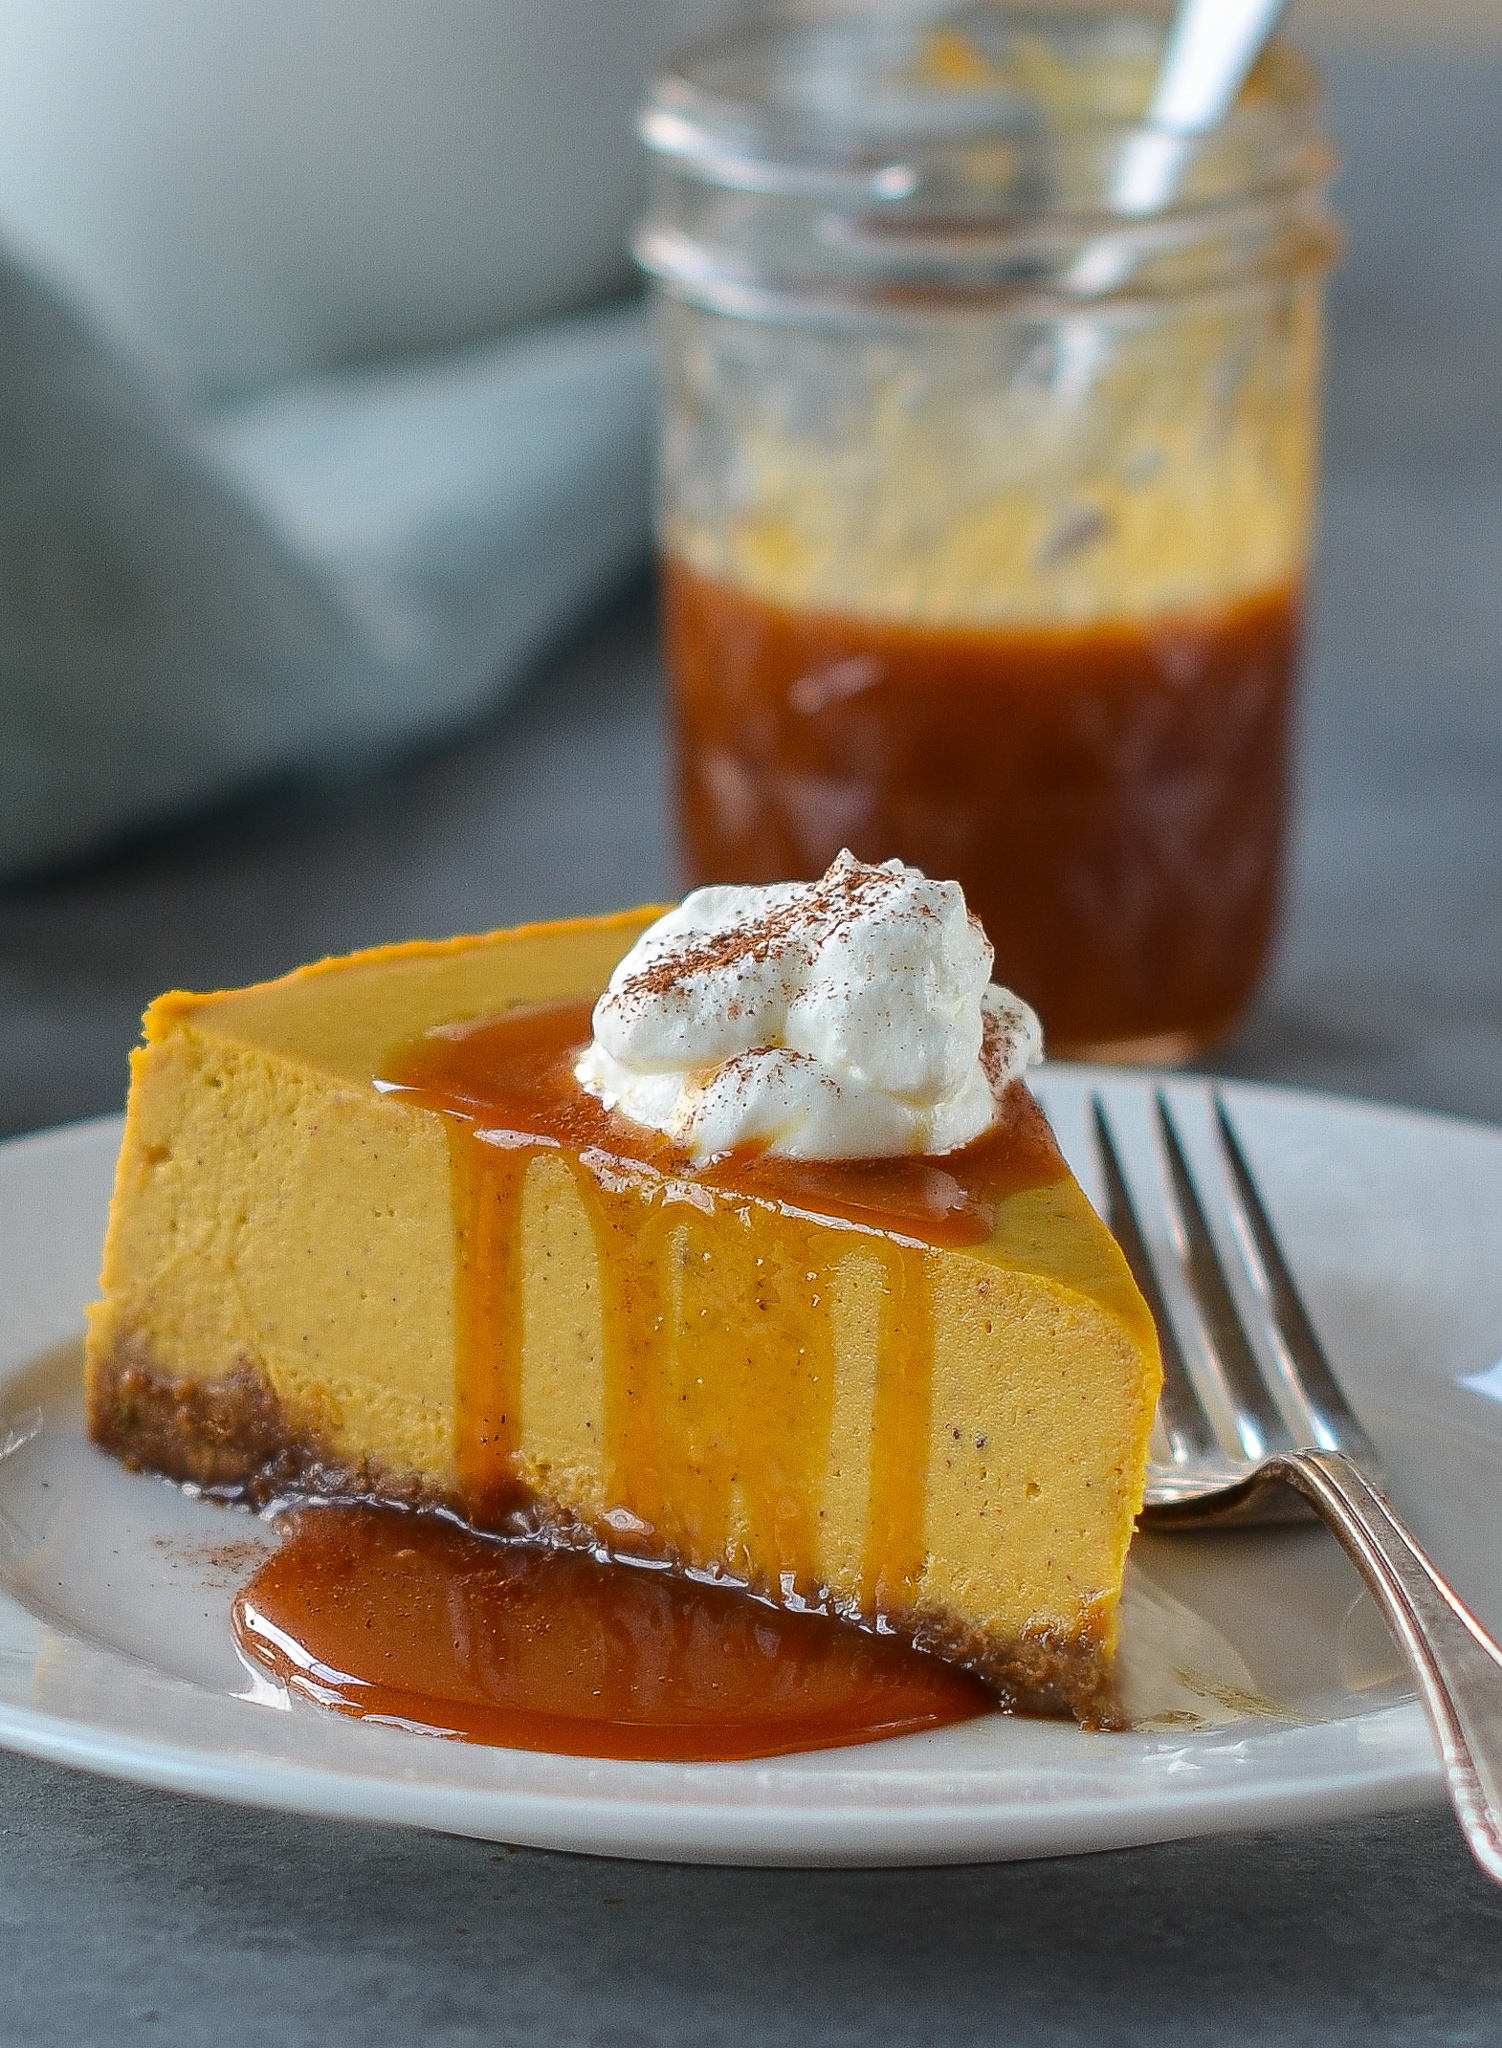 https://www.onceuponachef.com/images/2012/11/Pumpkin-Cheesecake_Gingernsap_Crust_Caramel_Sauce-2.jpg